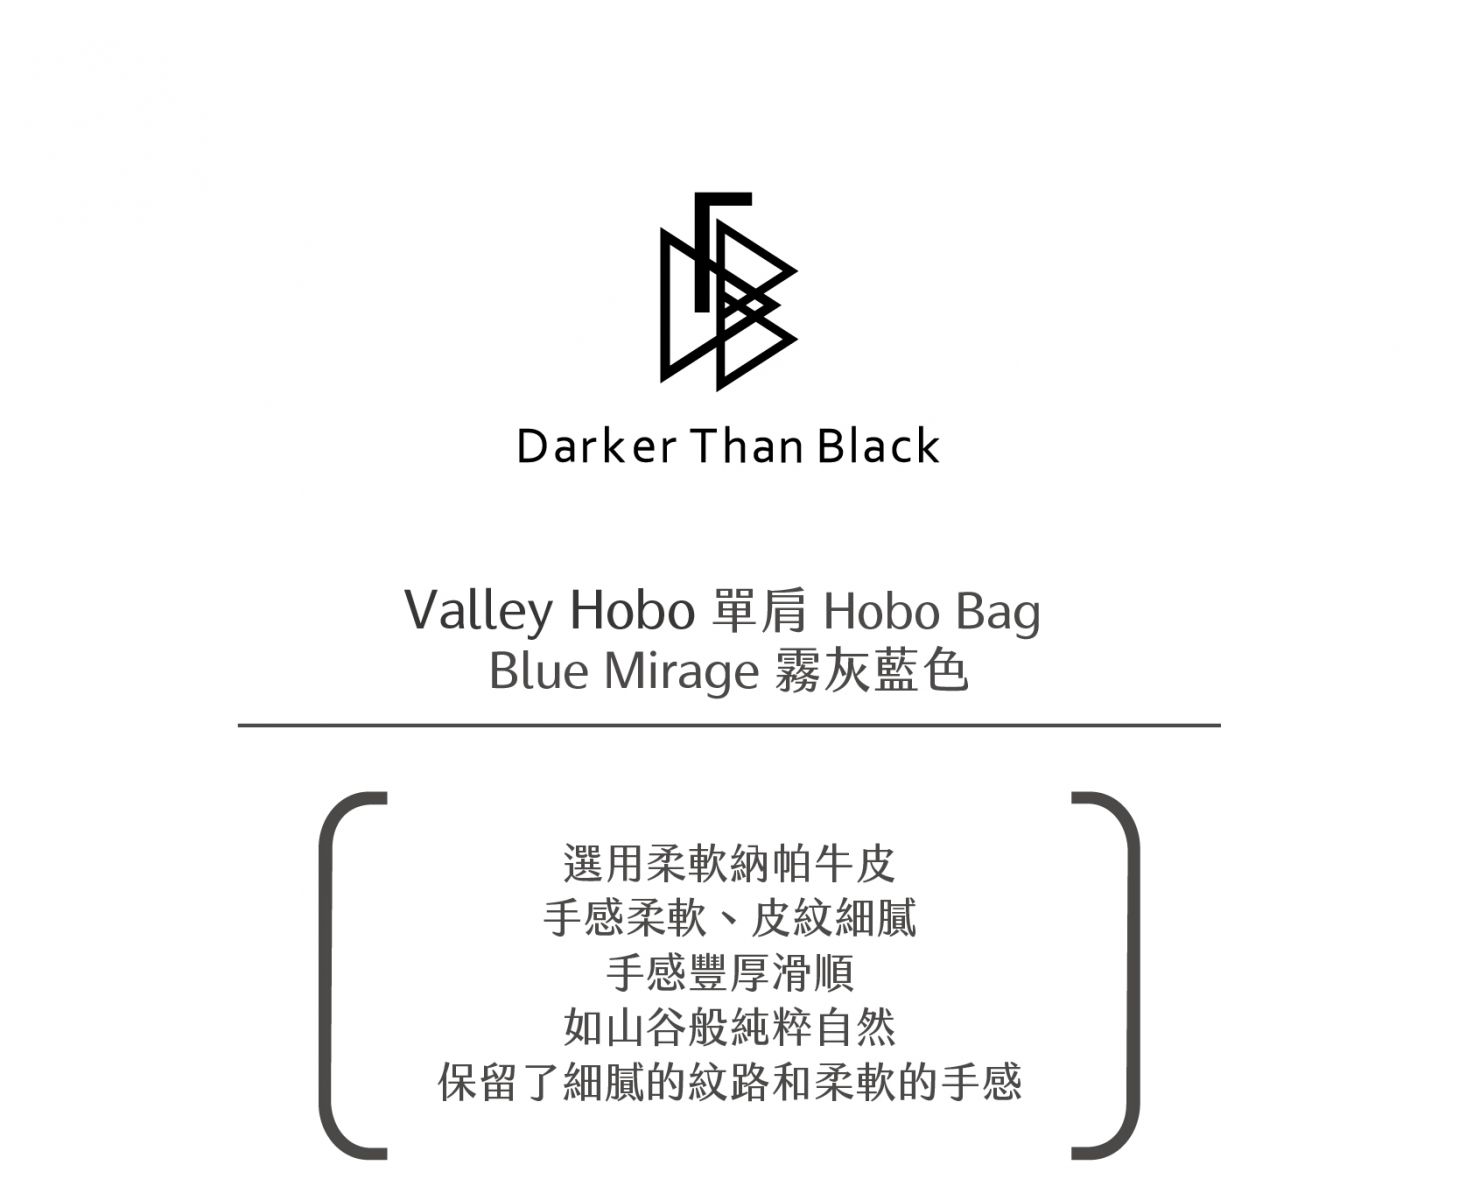 Valley Hobo Bag 軟包 (納帕牛皮) - Blue Mirage霧灰藍色